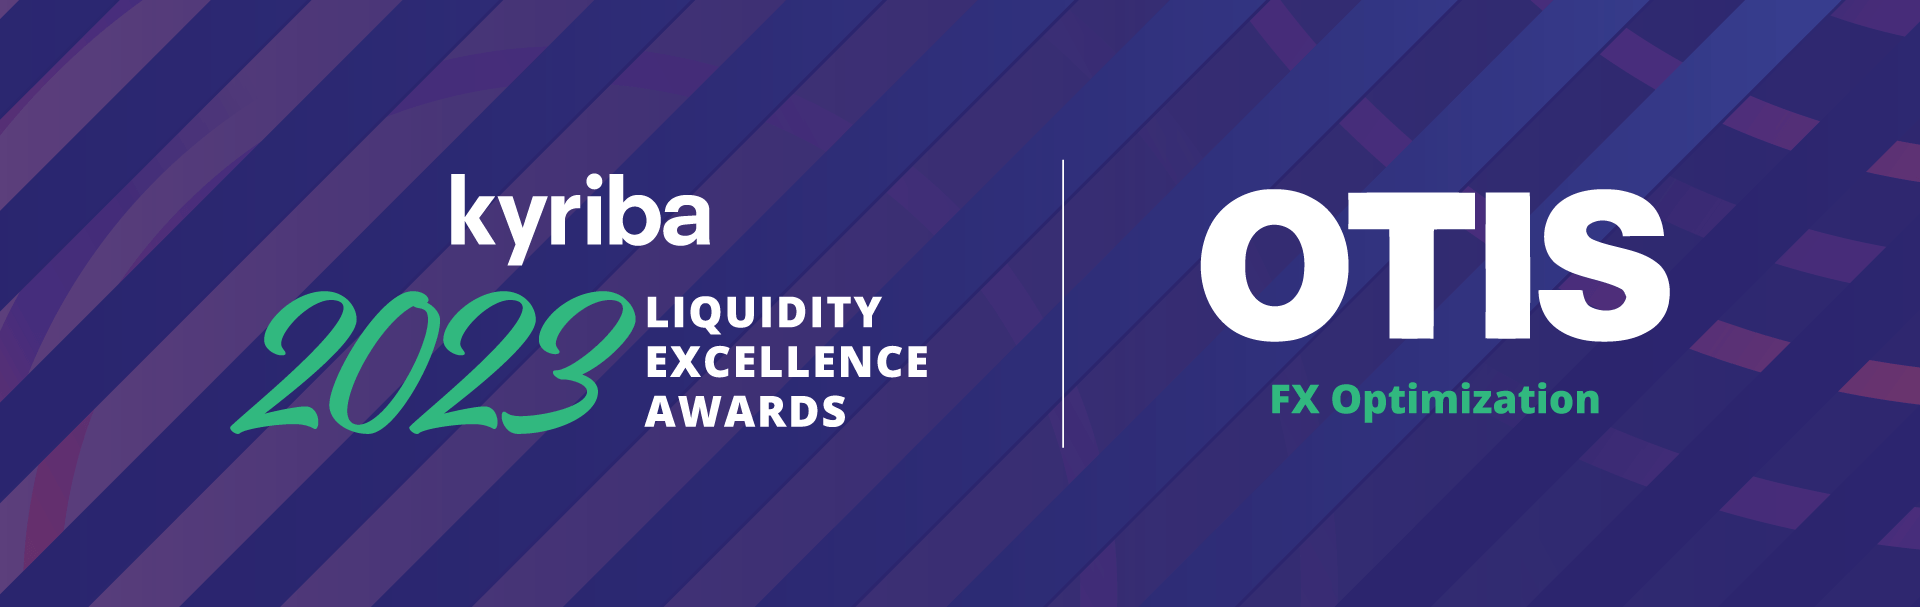 Kyriba Live 2023 Liquidity Excellence Awards with Otis